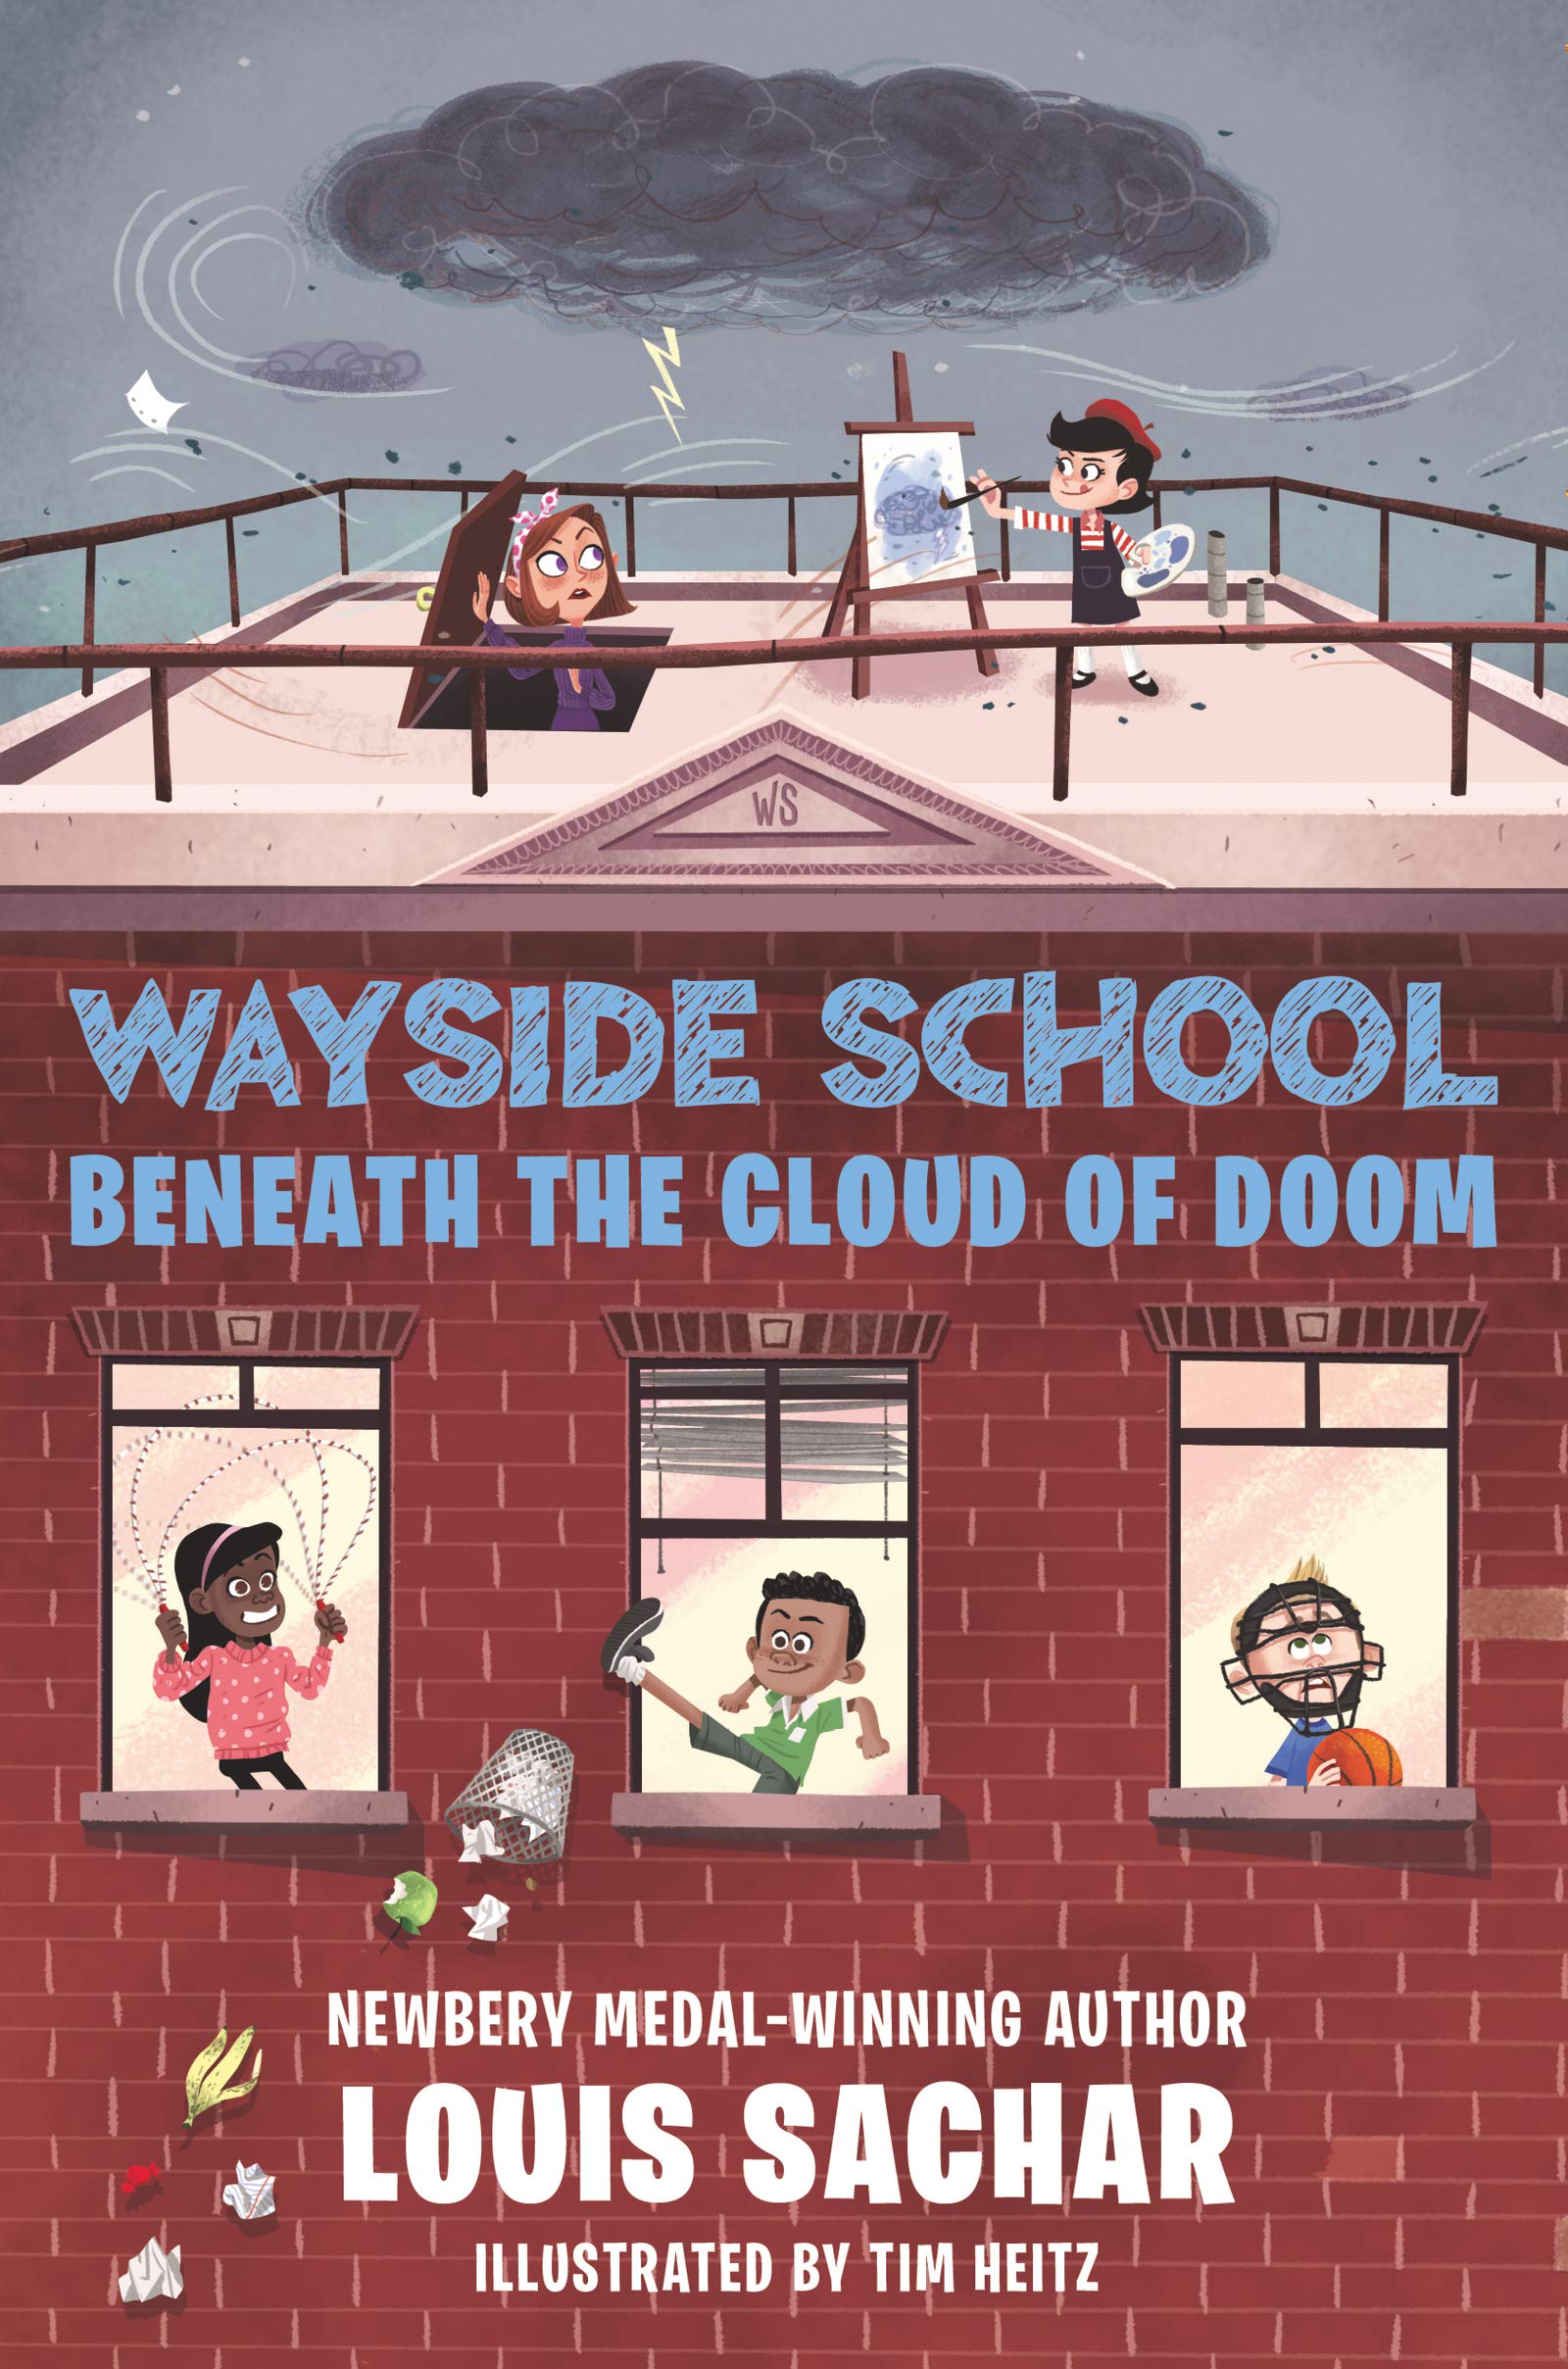 Wayside School - Gets a Little Stranger by Louis Sachar - Arena Illustration